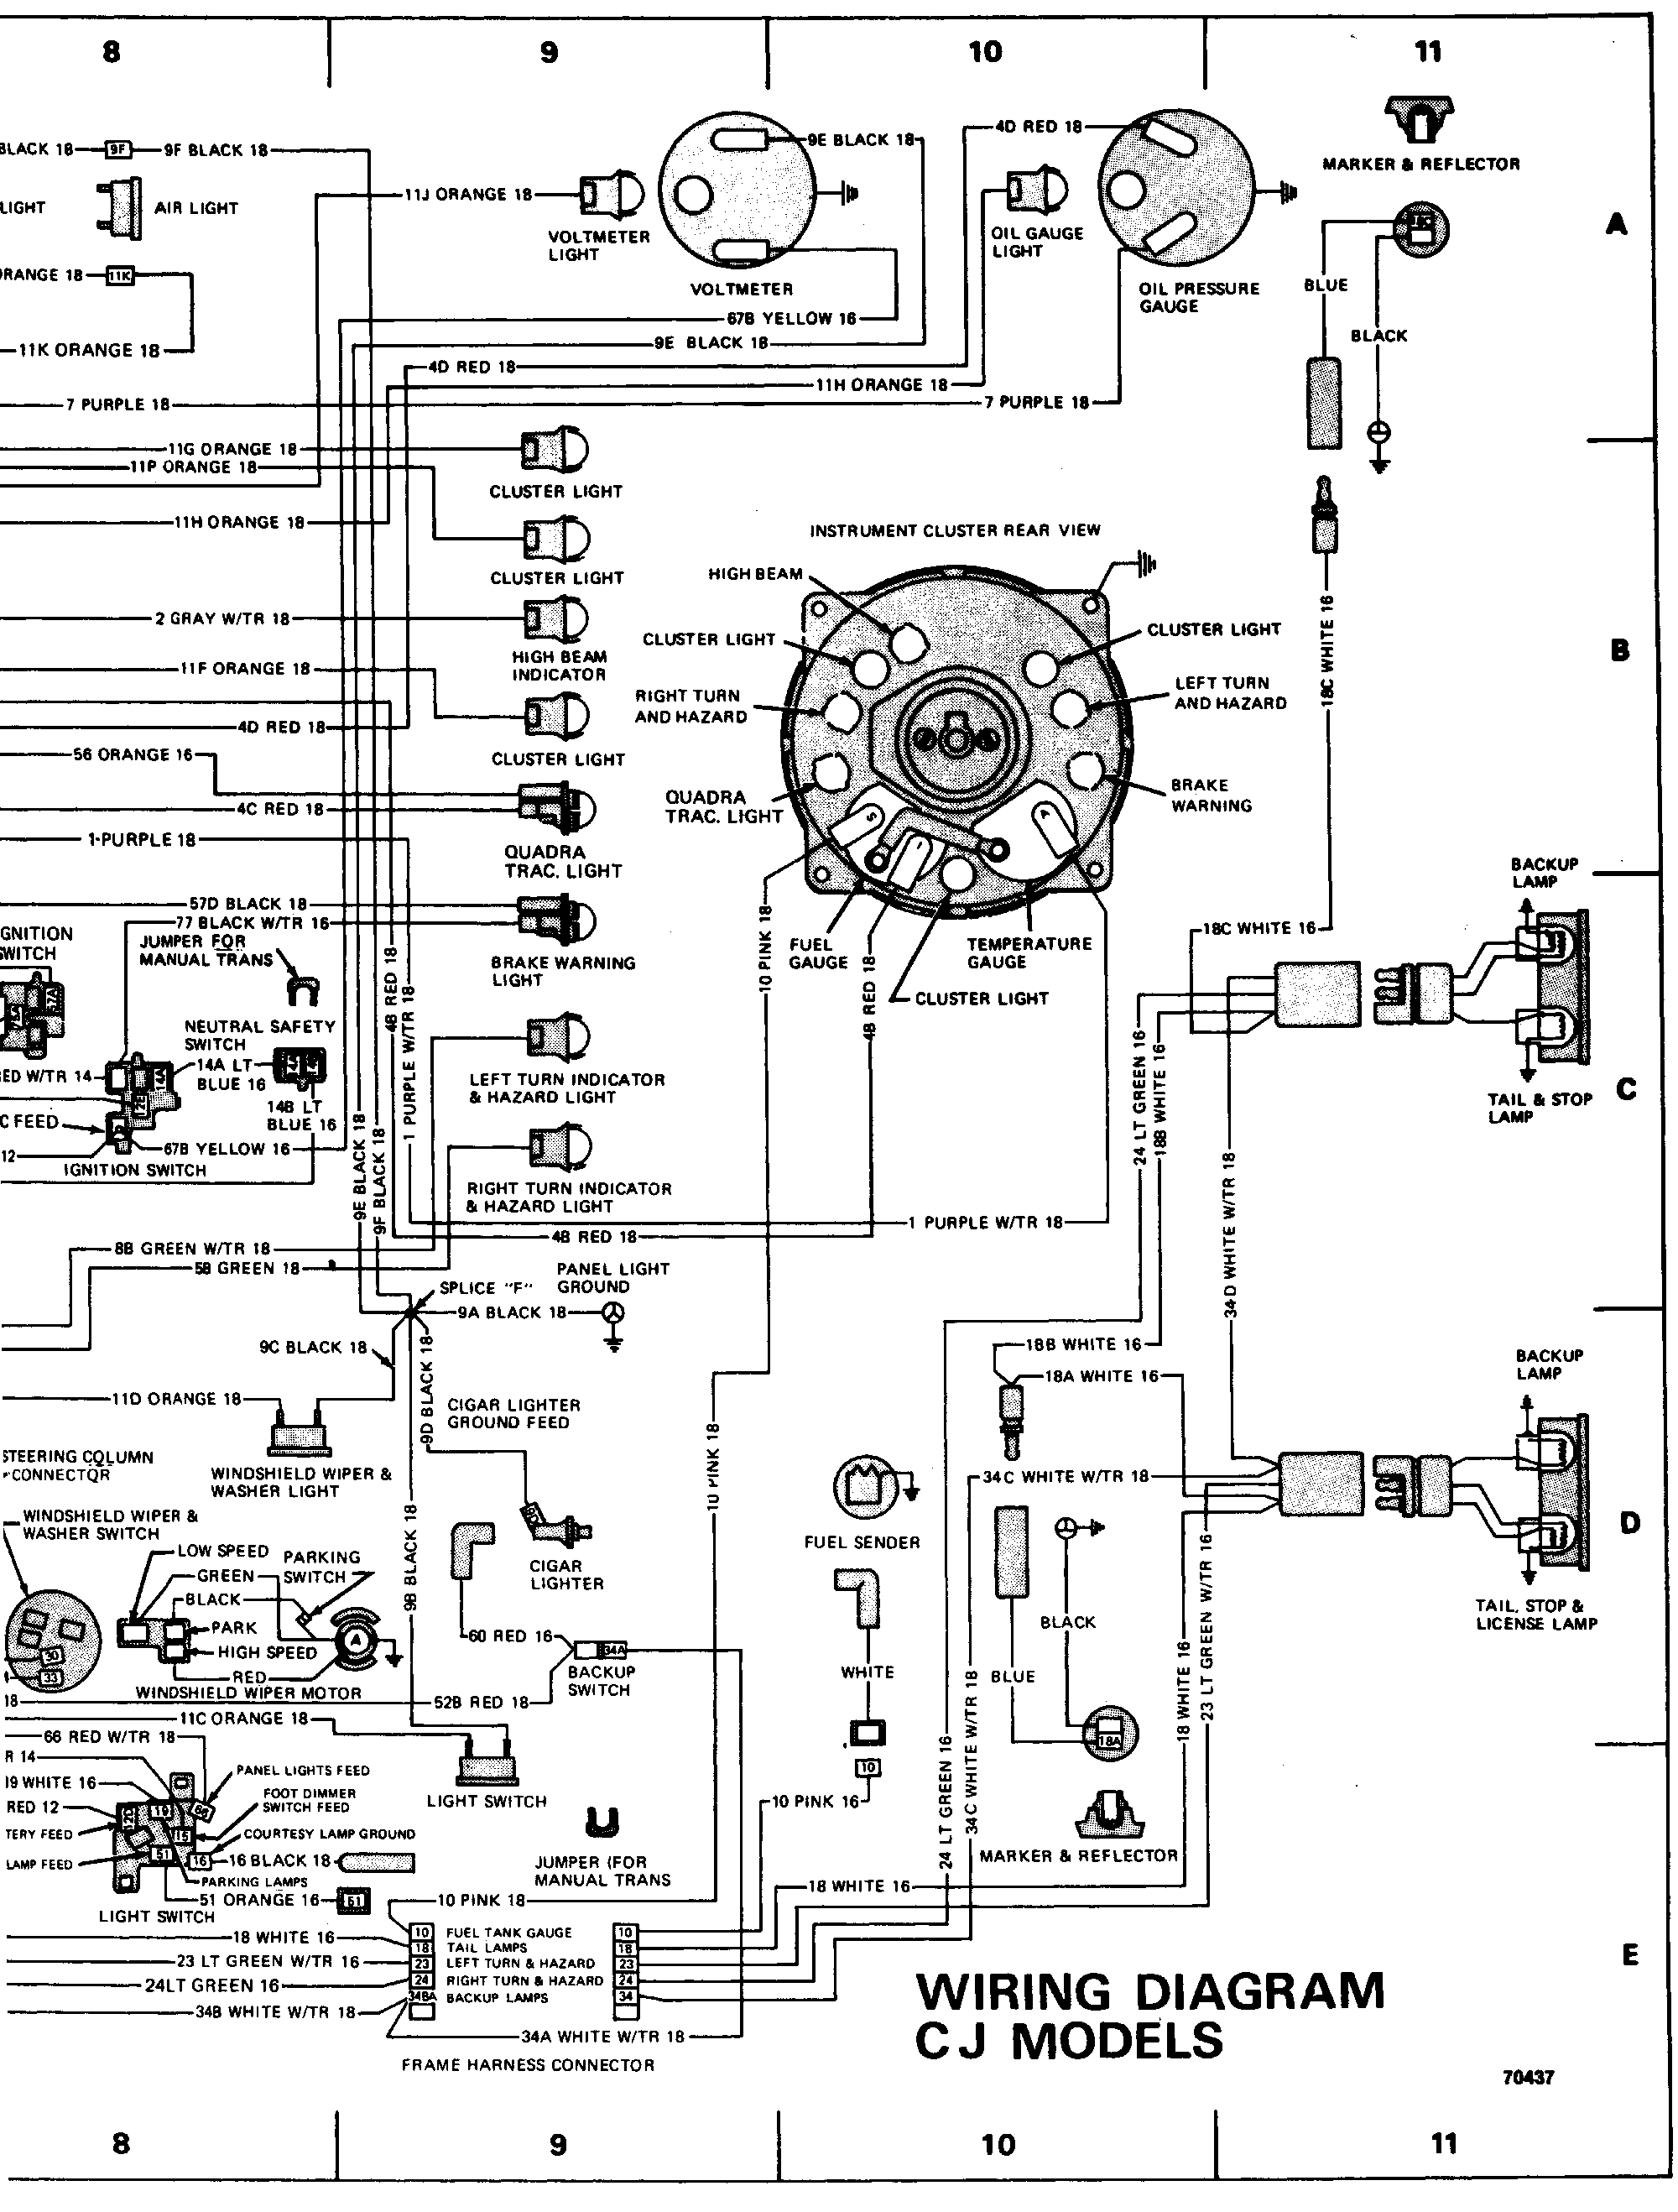 1975 Bmw Headlight Wiring Diagram Schematic from oljeep.com